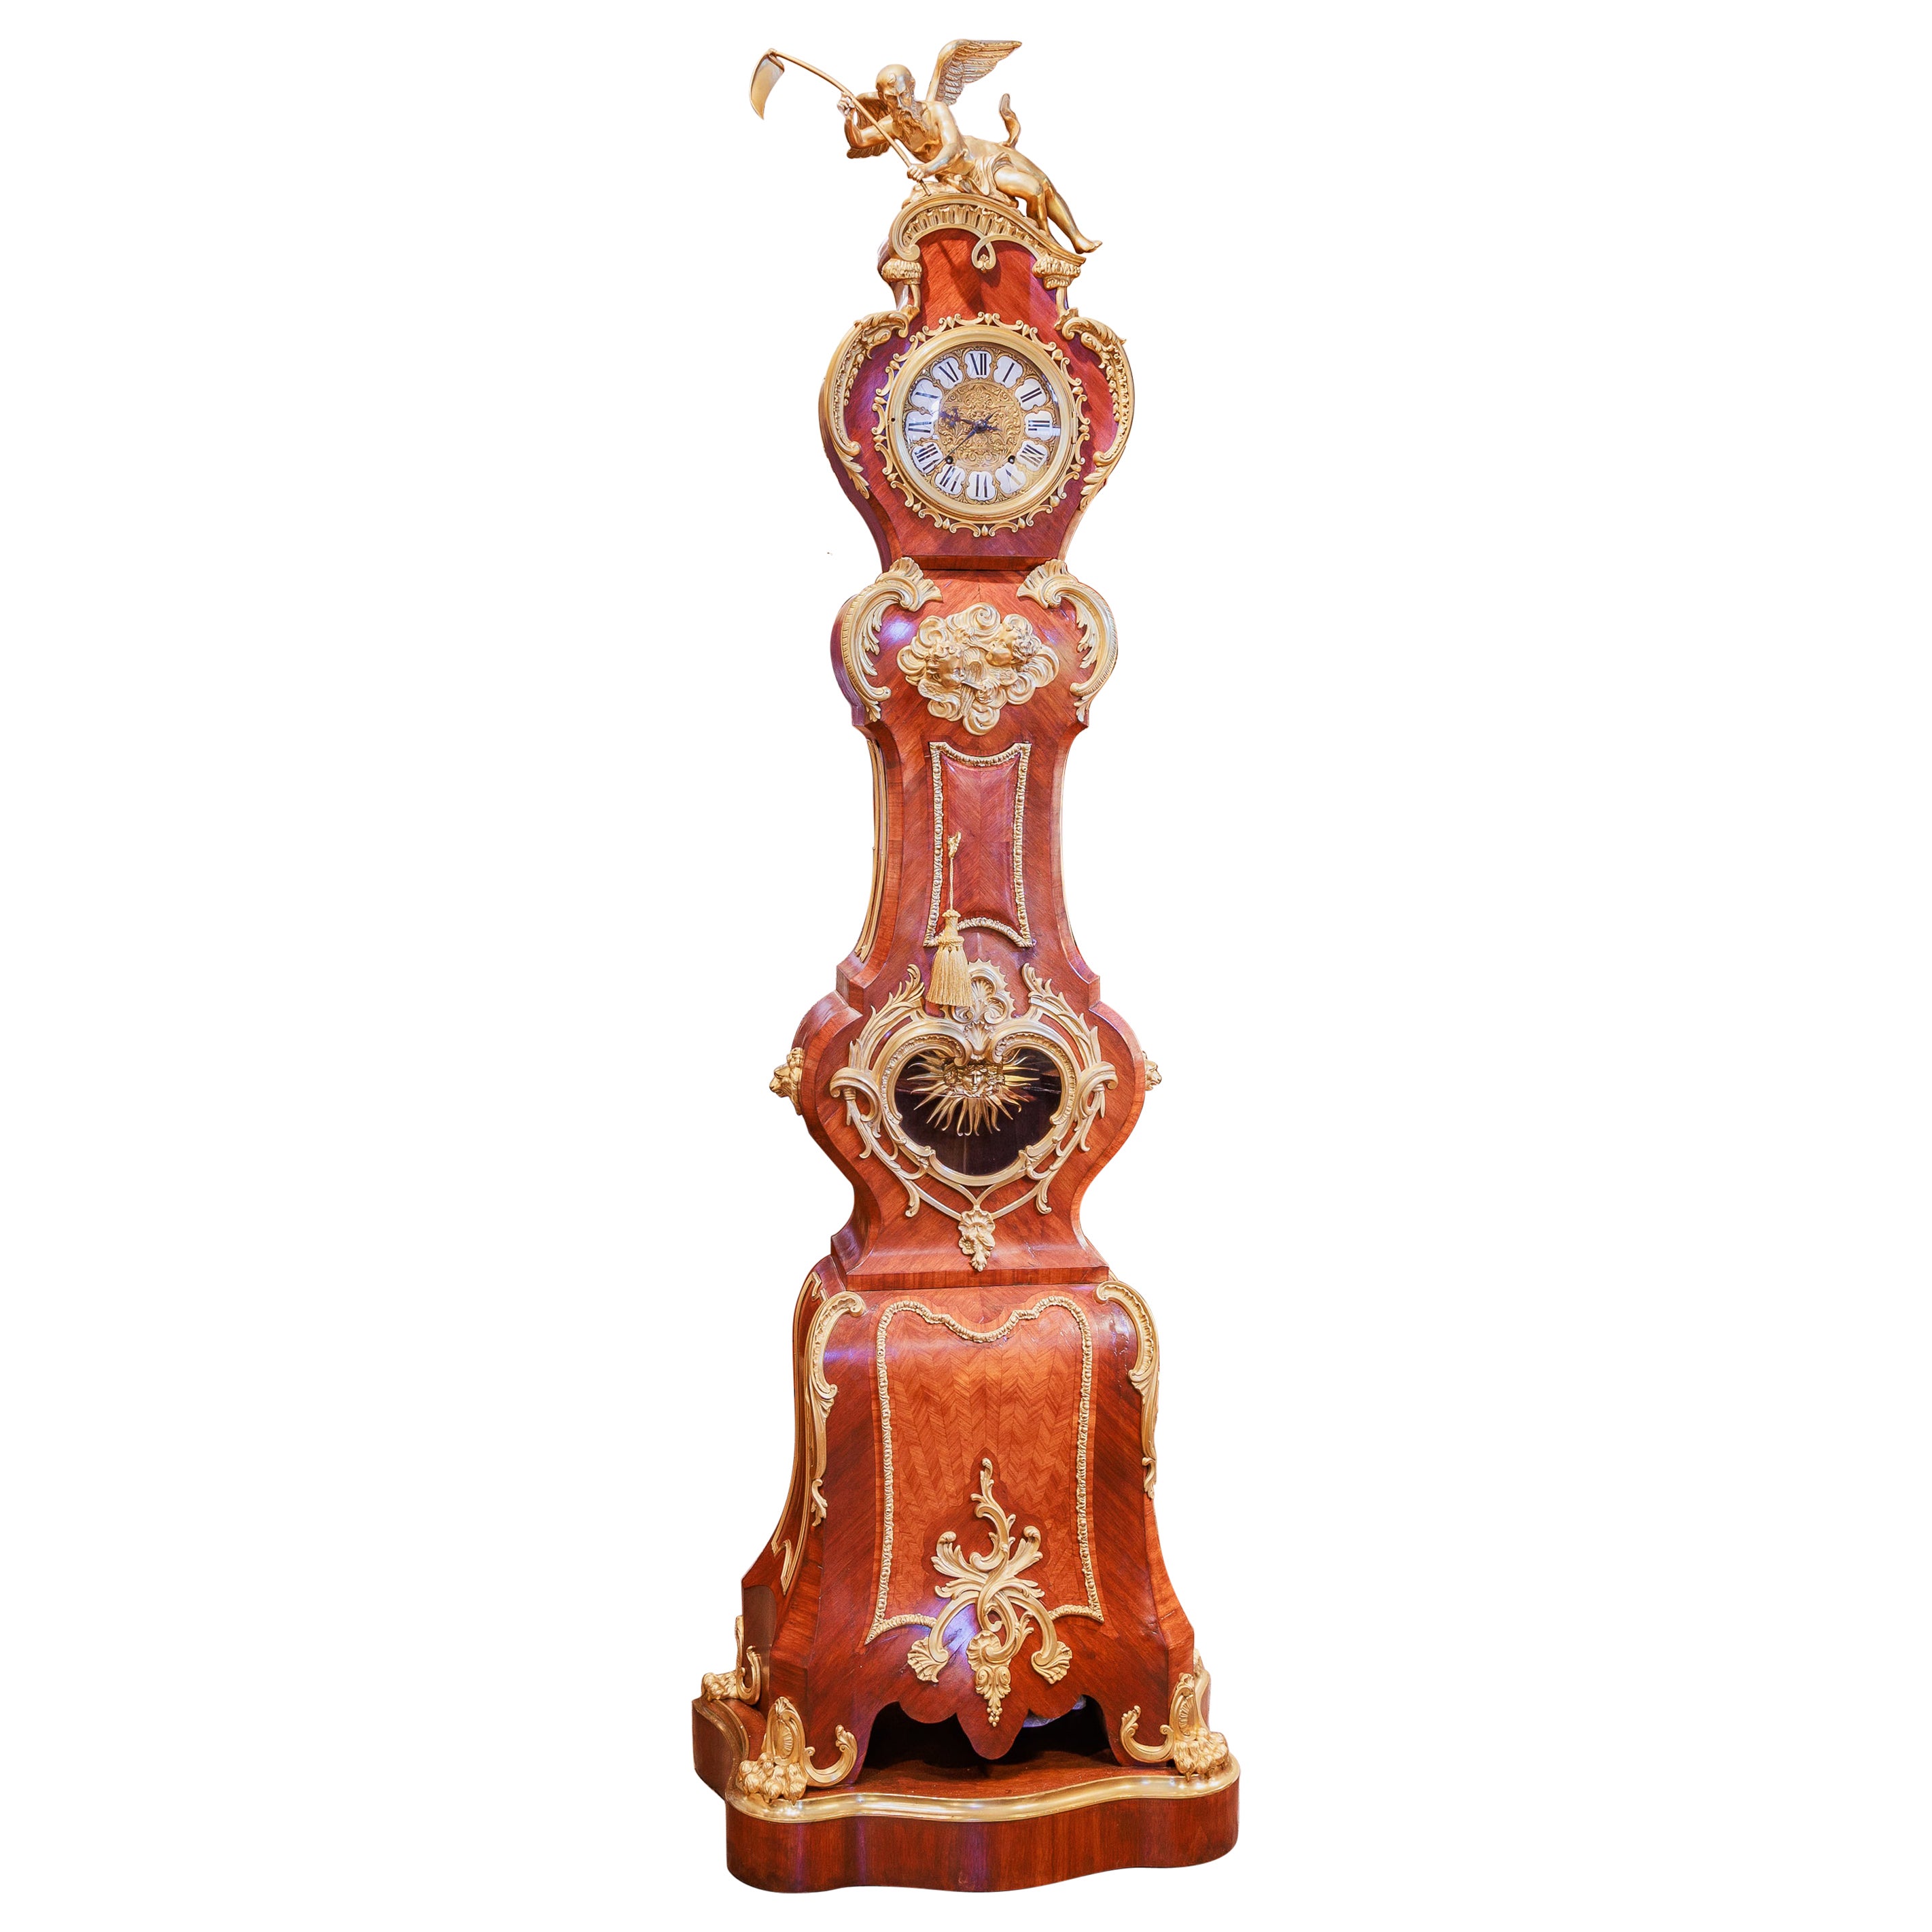 A fine 19th century French Louis XV gilt bronze grandfather clock. 